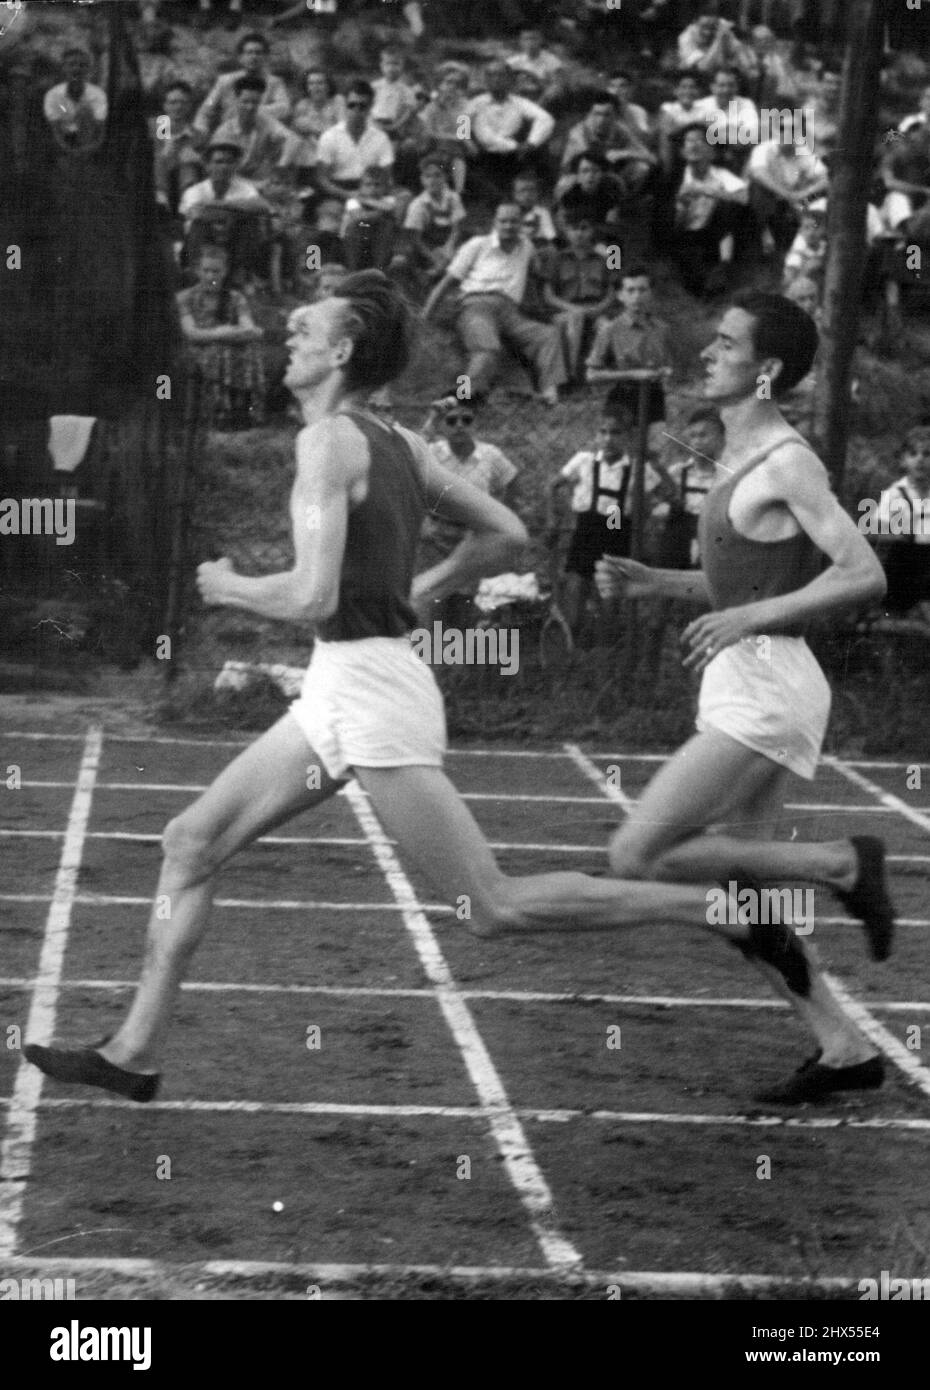 Istvan Rozsavolgyi and Sandor Tharos in action during a 1,500 metres race. November 26, 1955. (Photo by Magyar Foto). Stock Photo